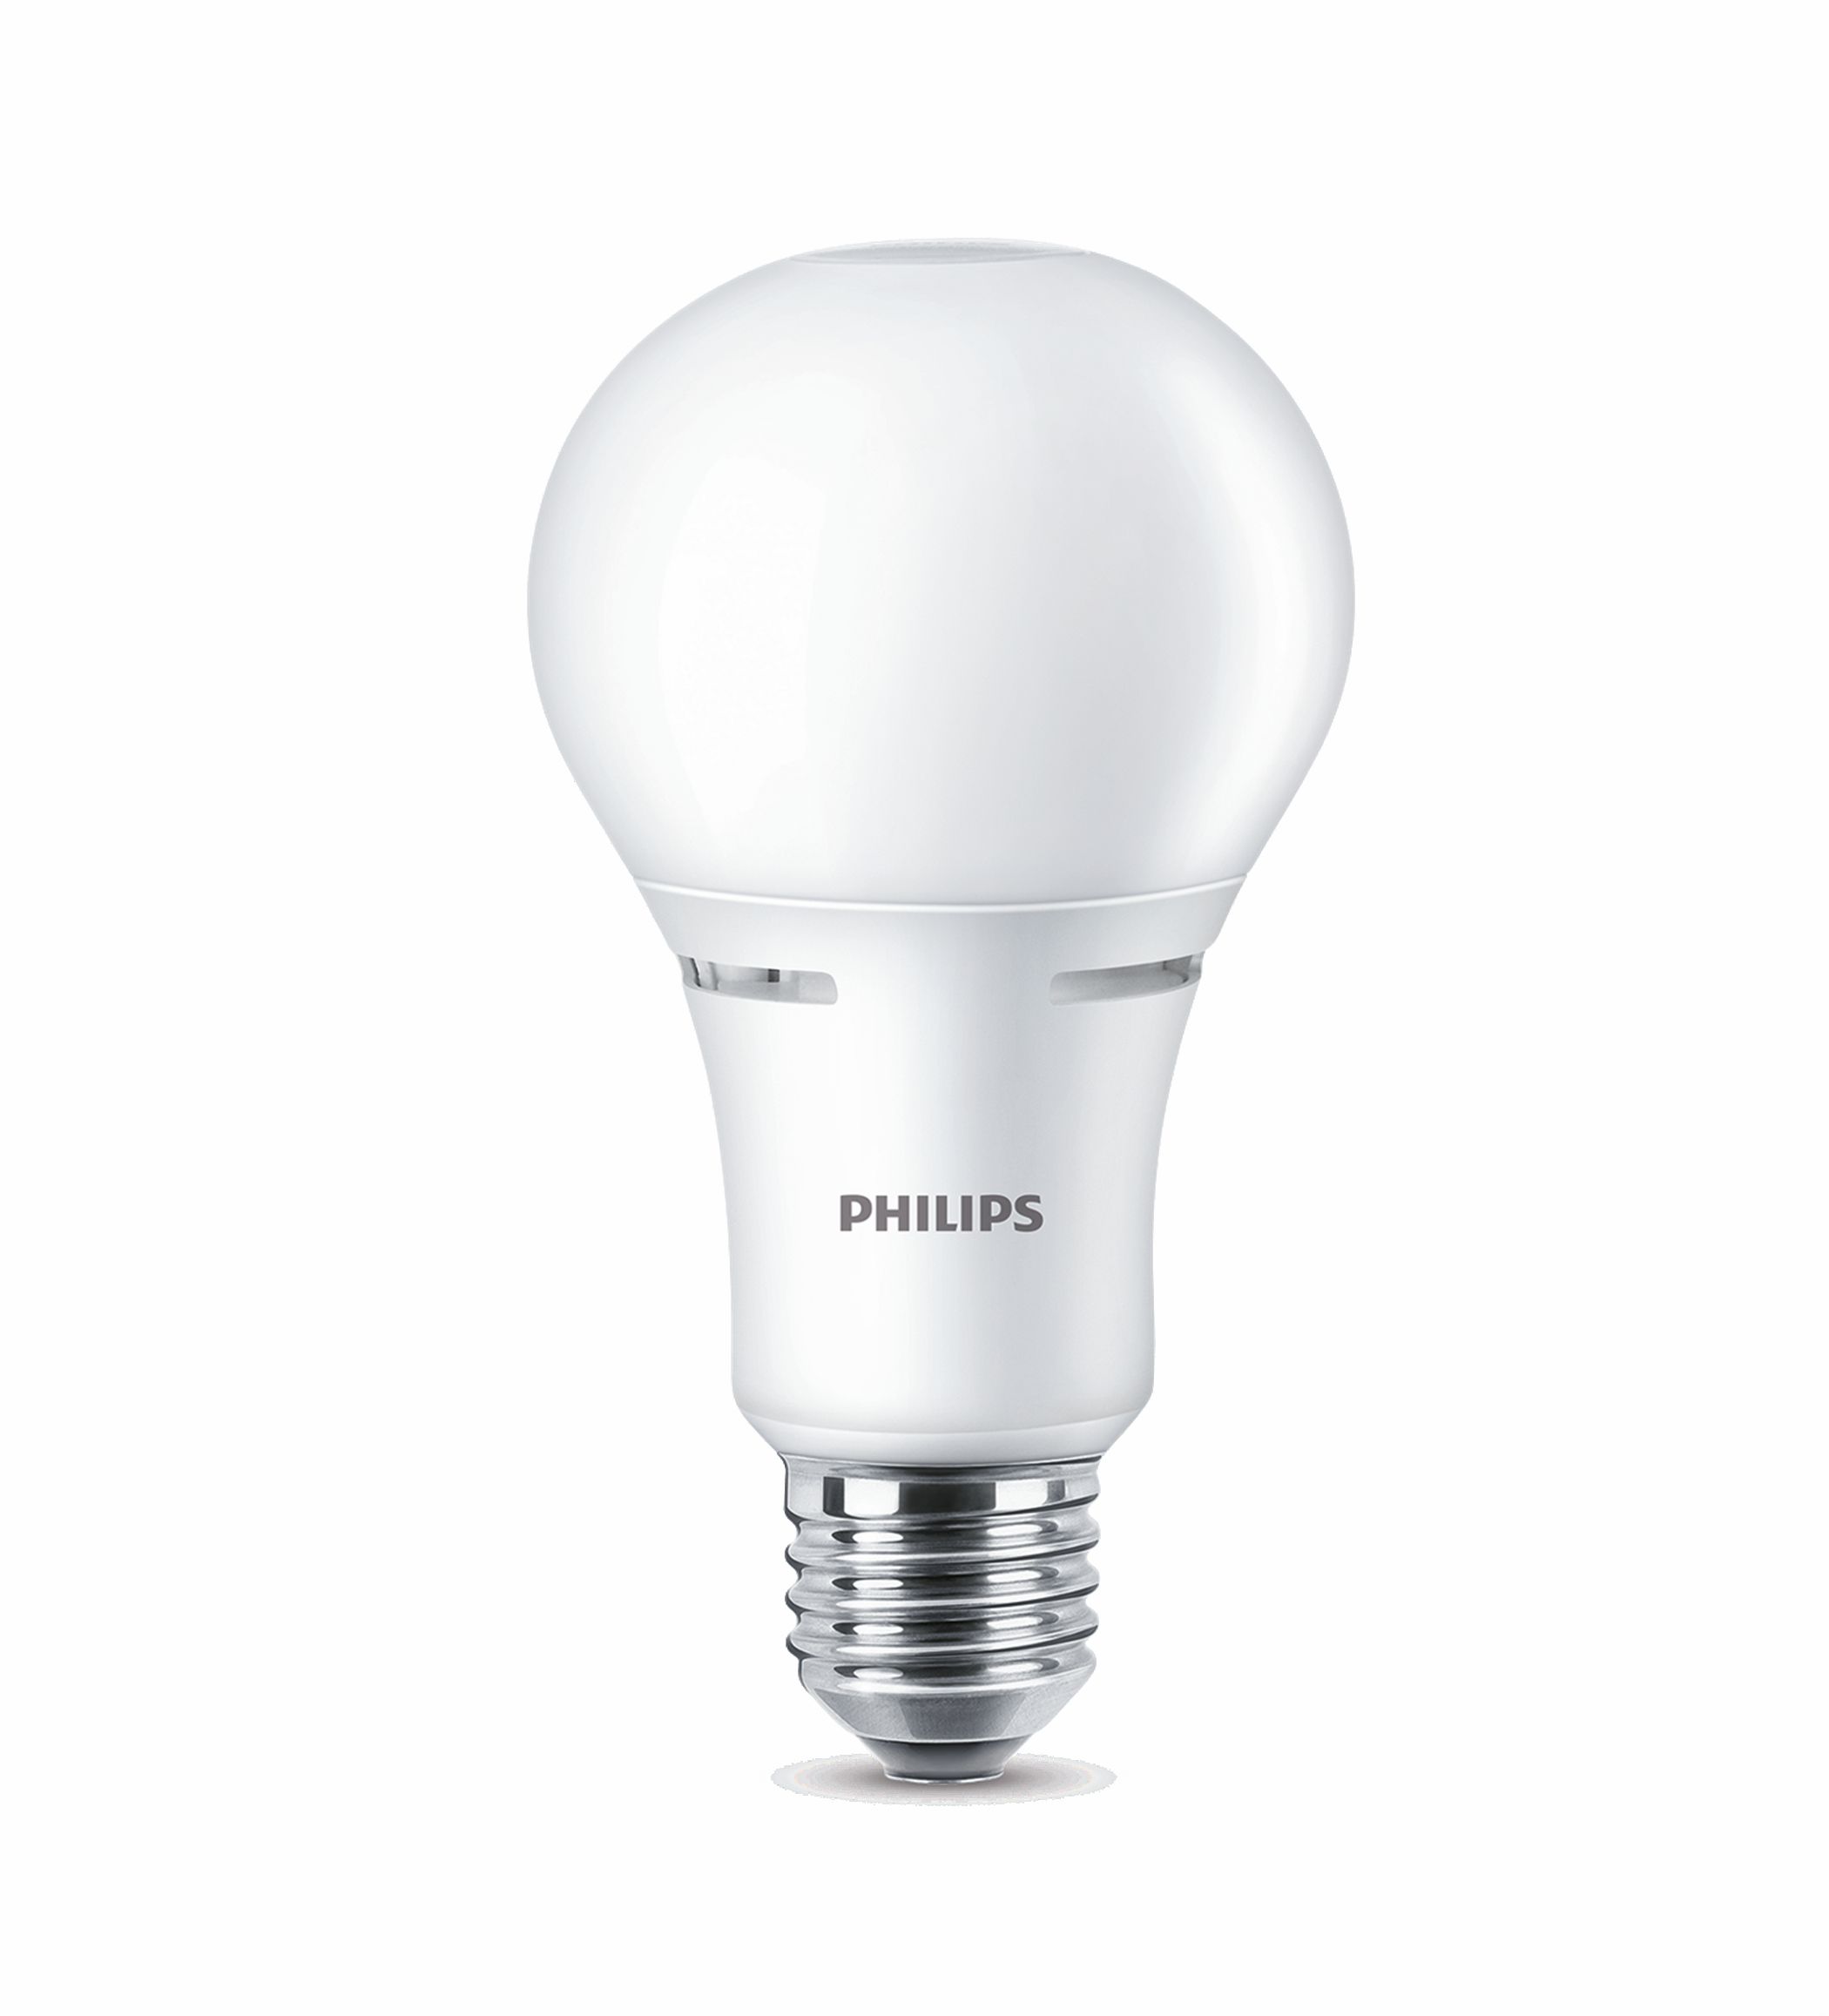 3 Glühbirne LED Philips myliving 532592916 27 n 3 W Surfaced lighting spot